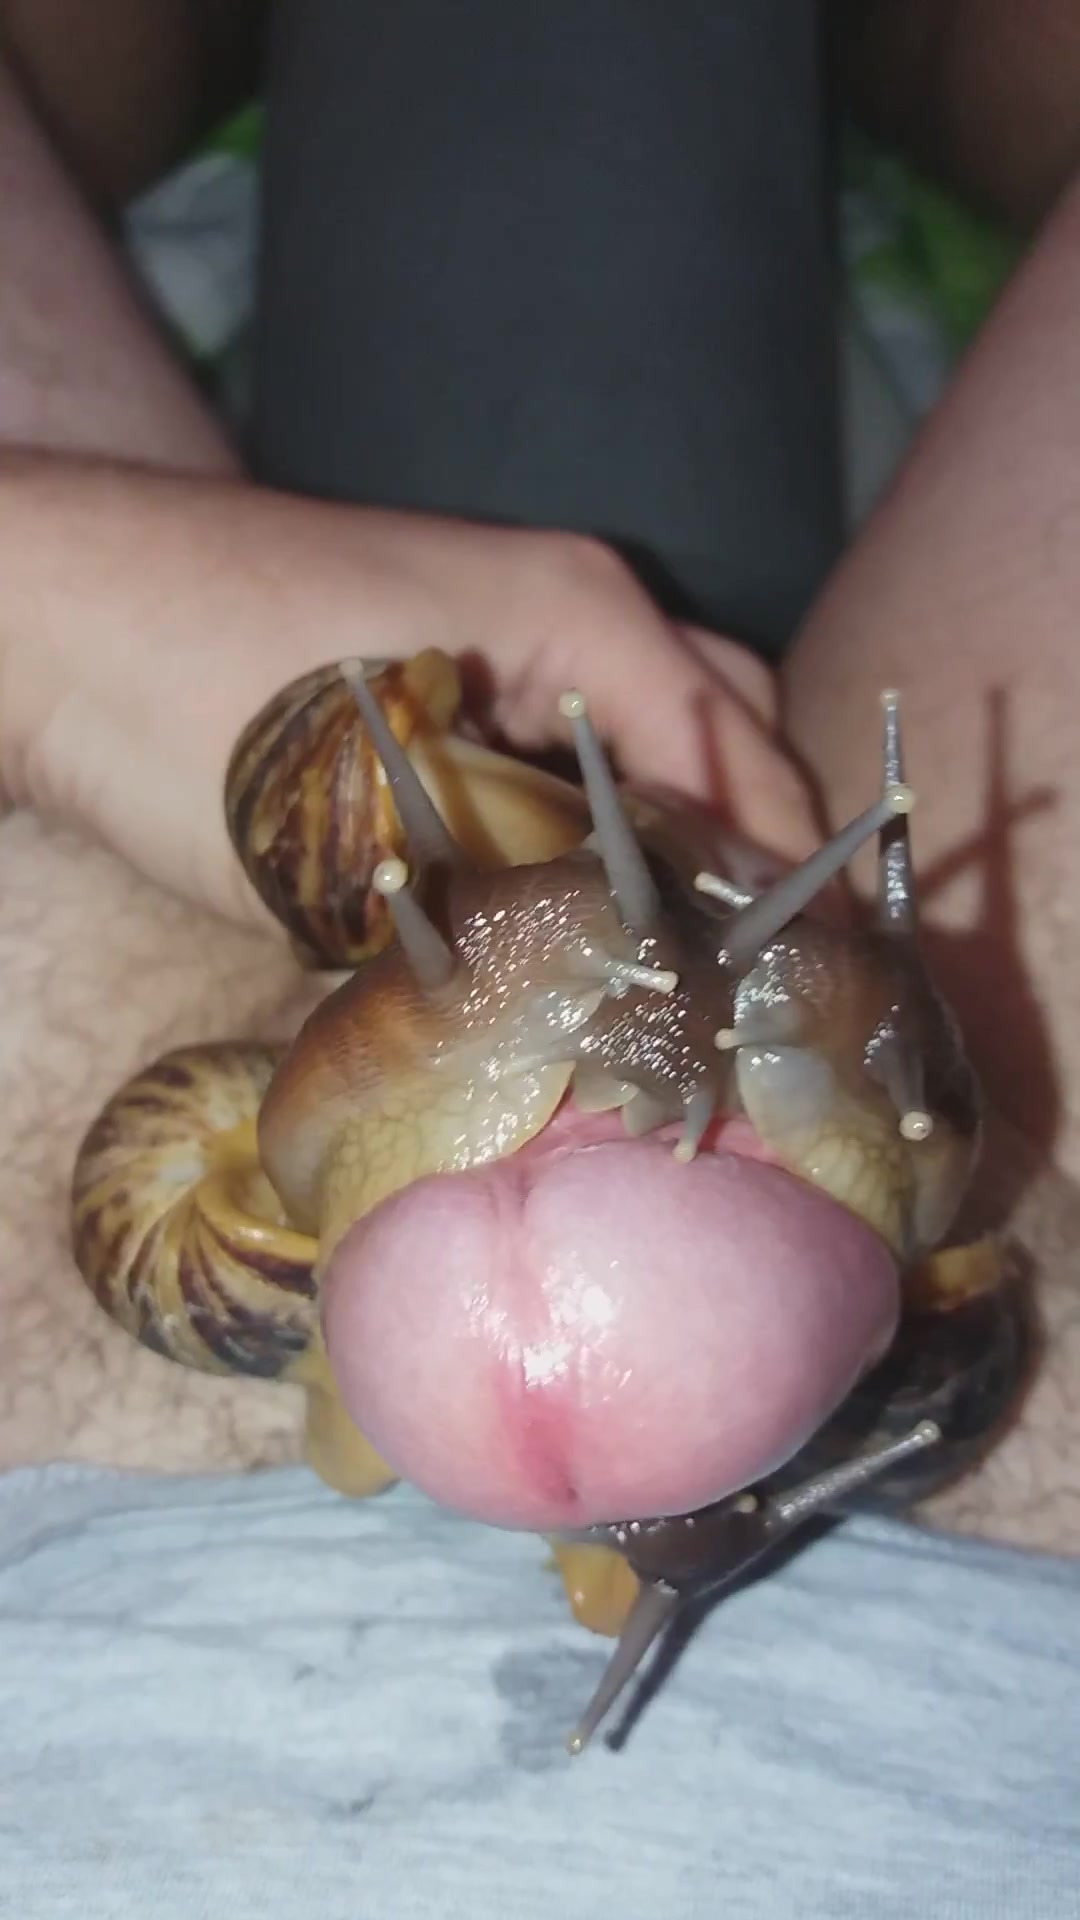 Snail Porn - Few snails but big cumshot / Zoo Tube 1